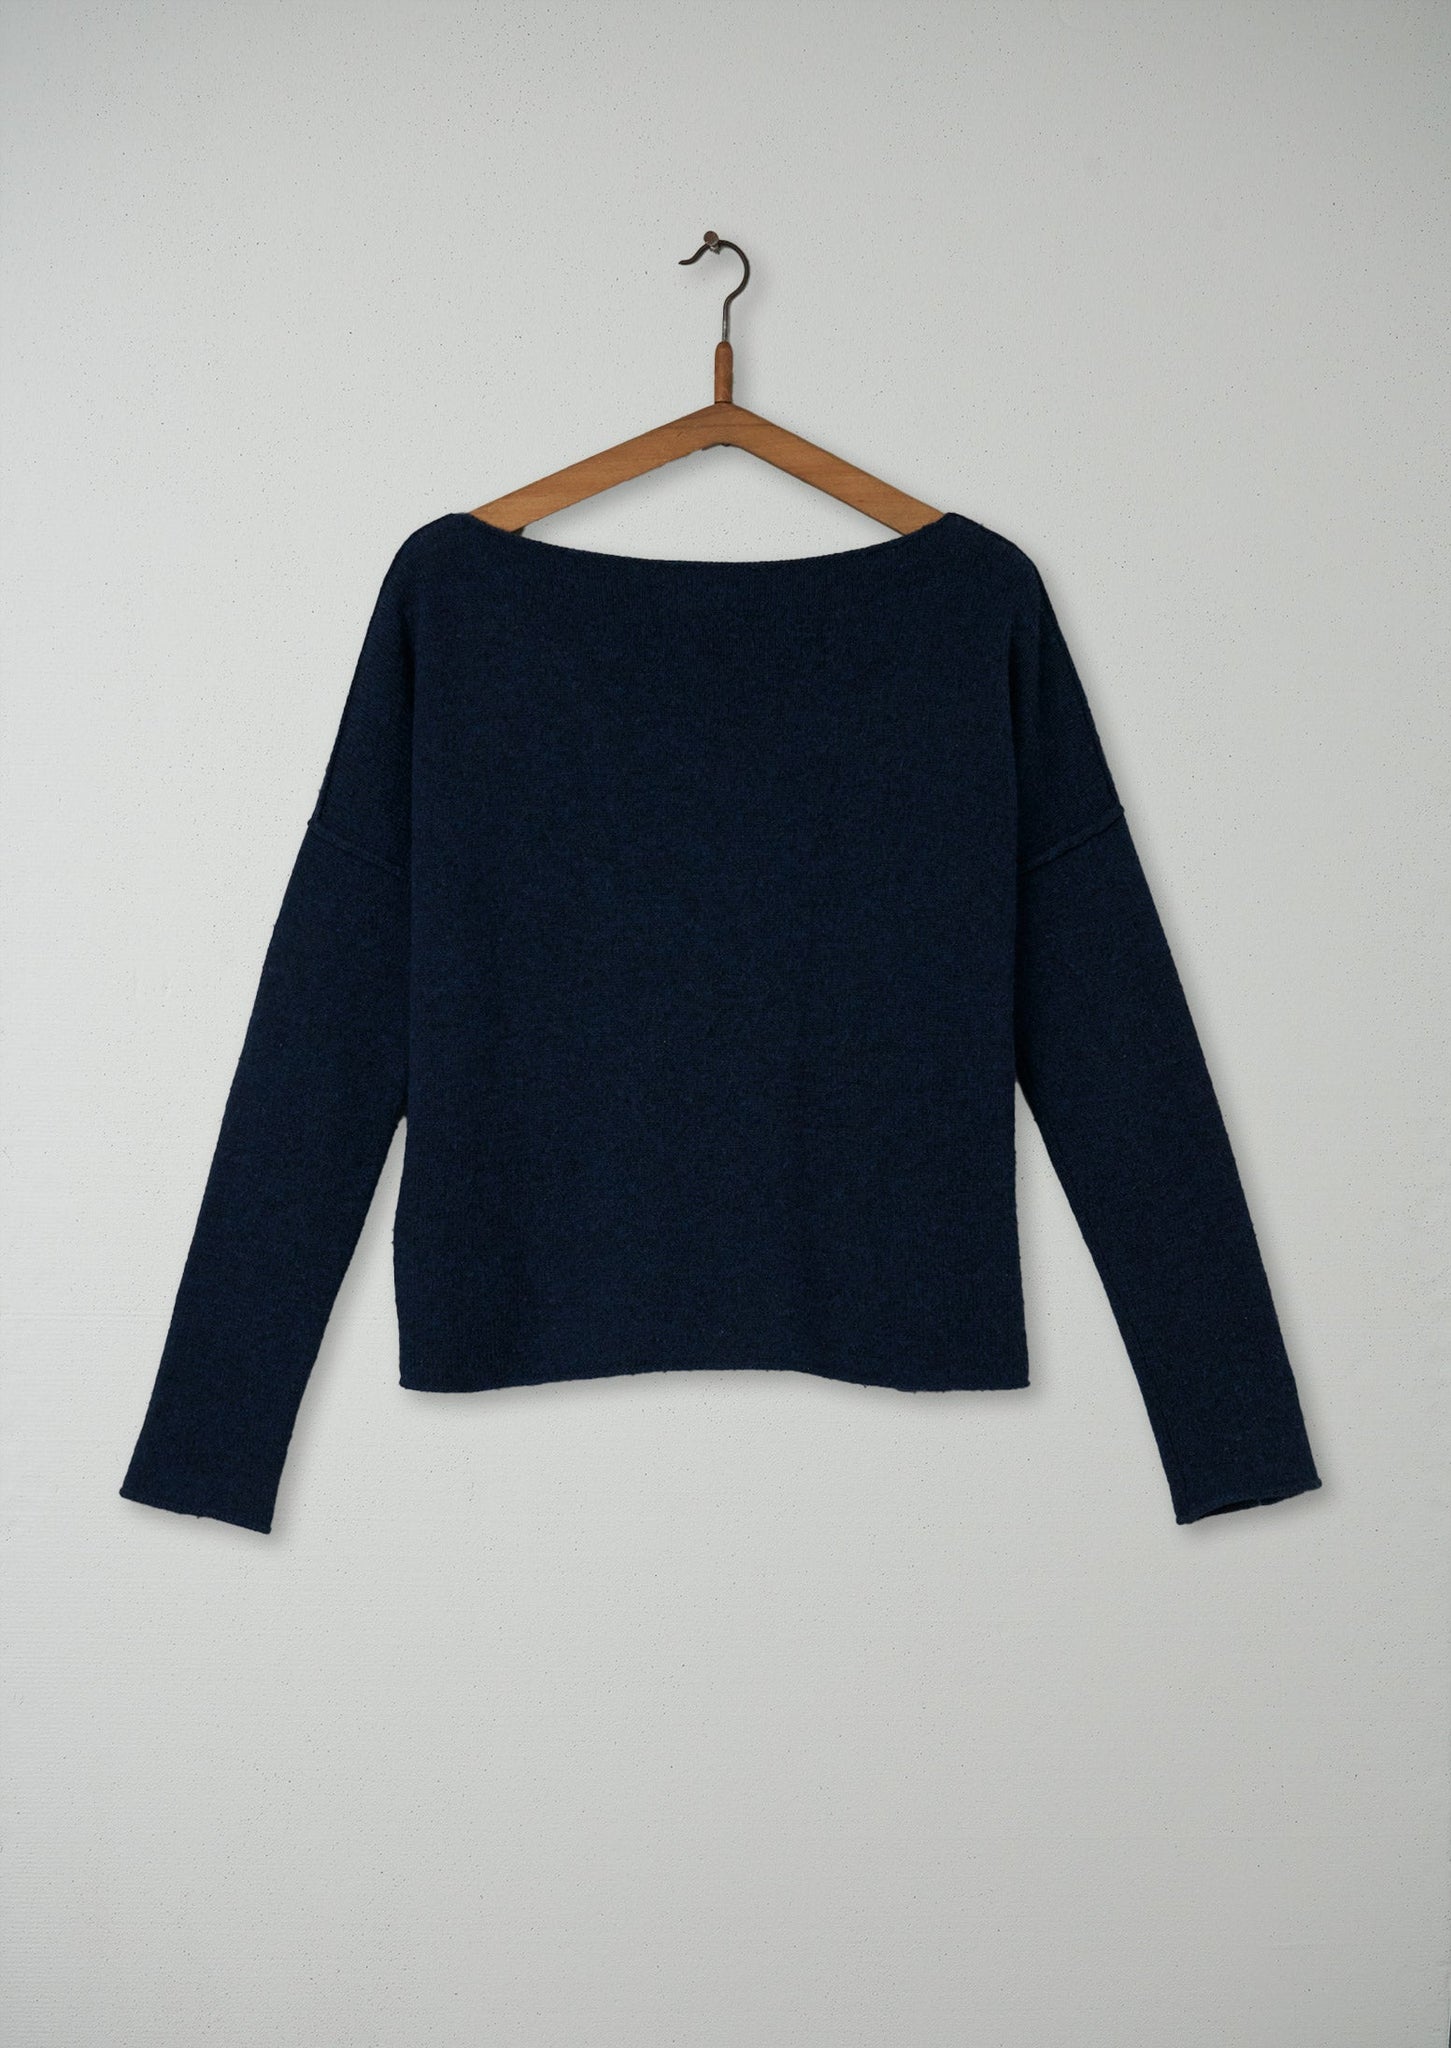 Reworn Square Cut Sweater Size M (042) | Petrol